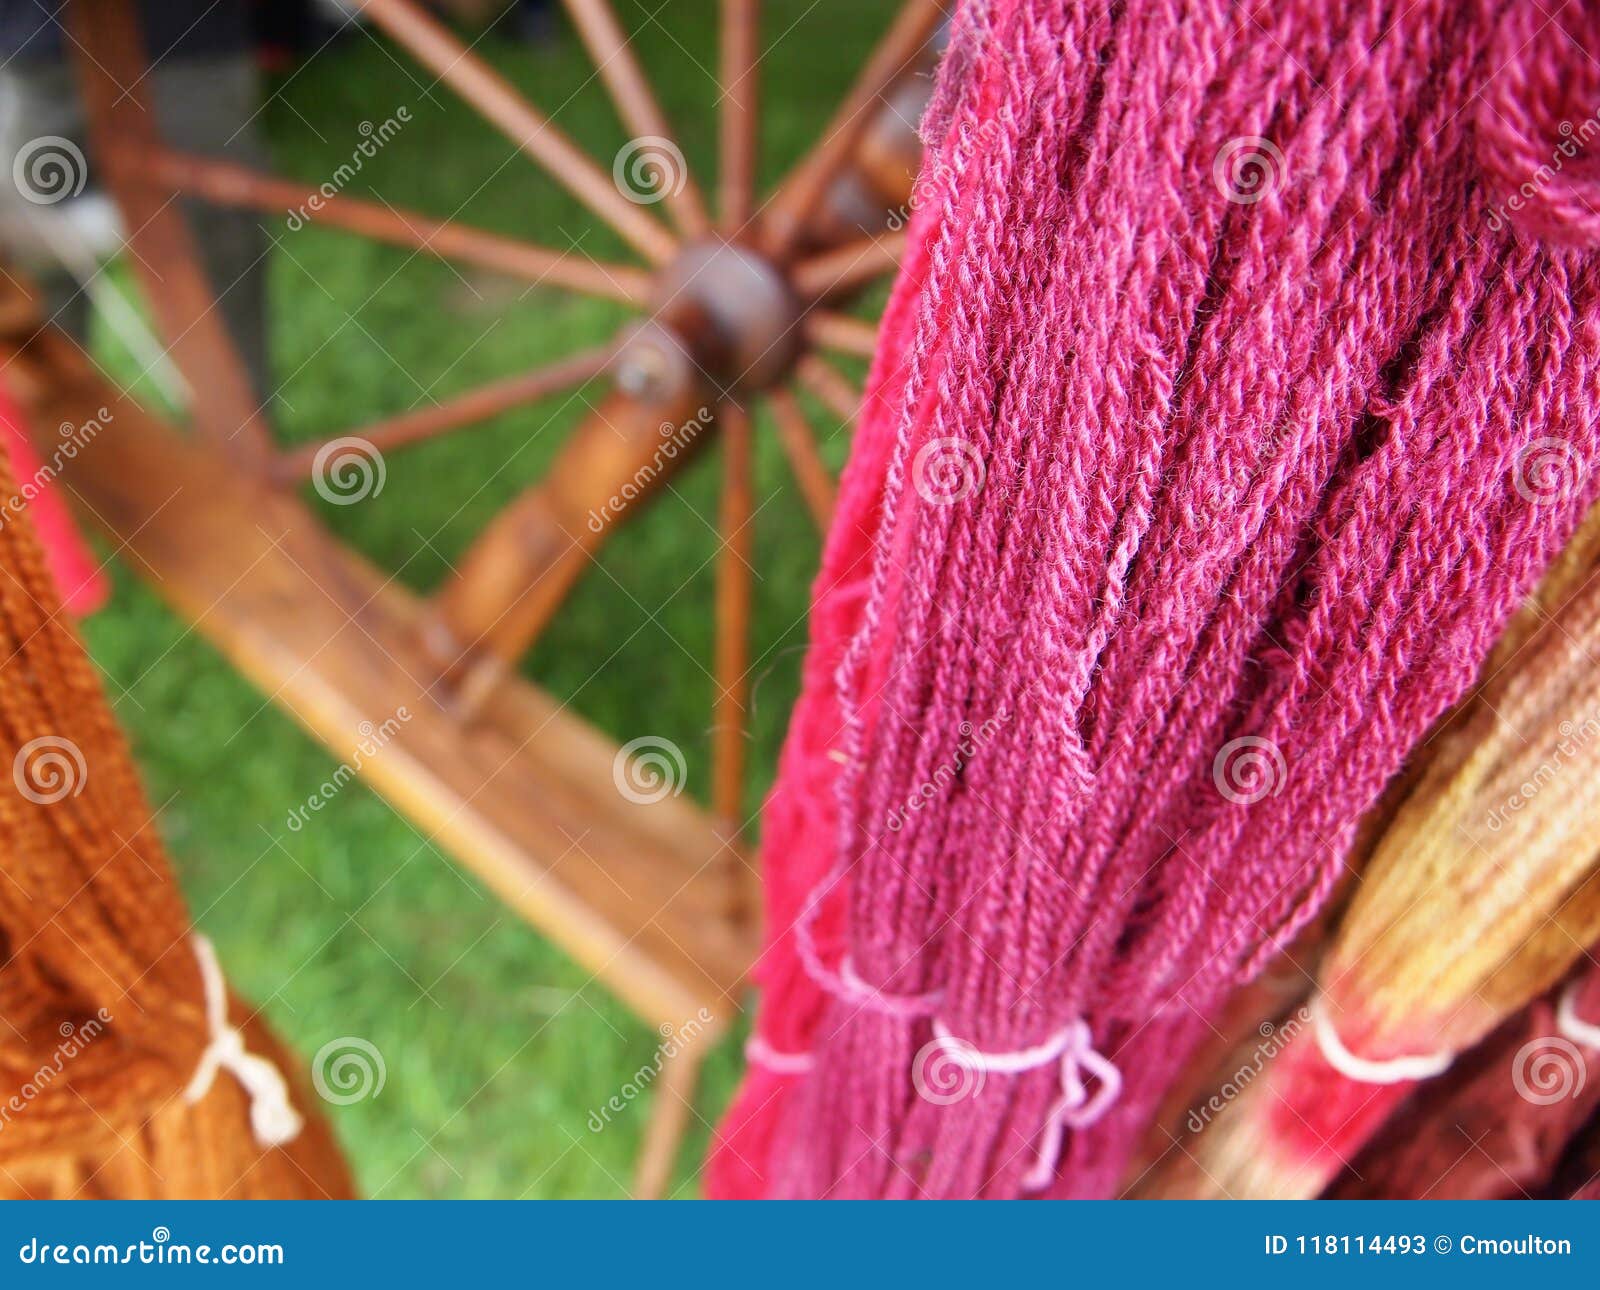 Spinning Wheel For Making Yarn From Wool Fibers. Vintage Rustic